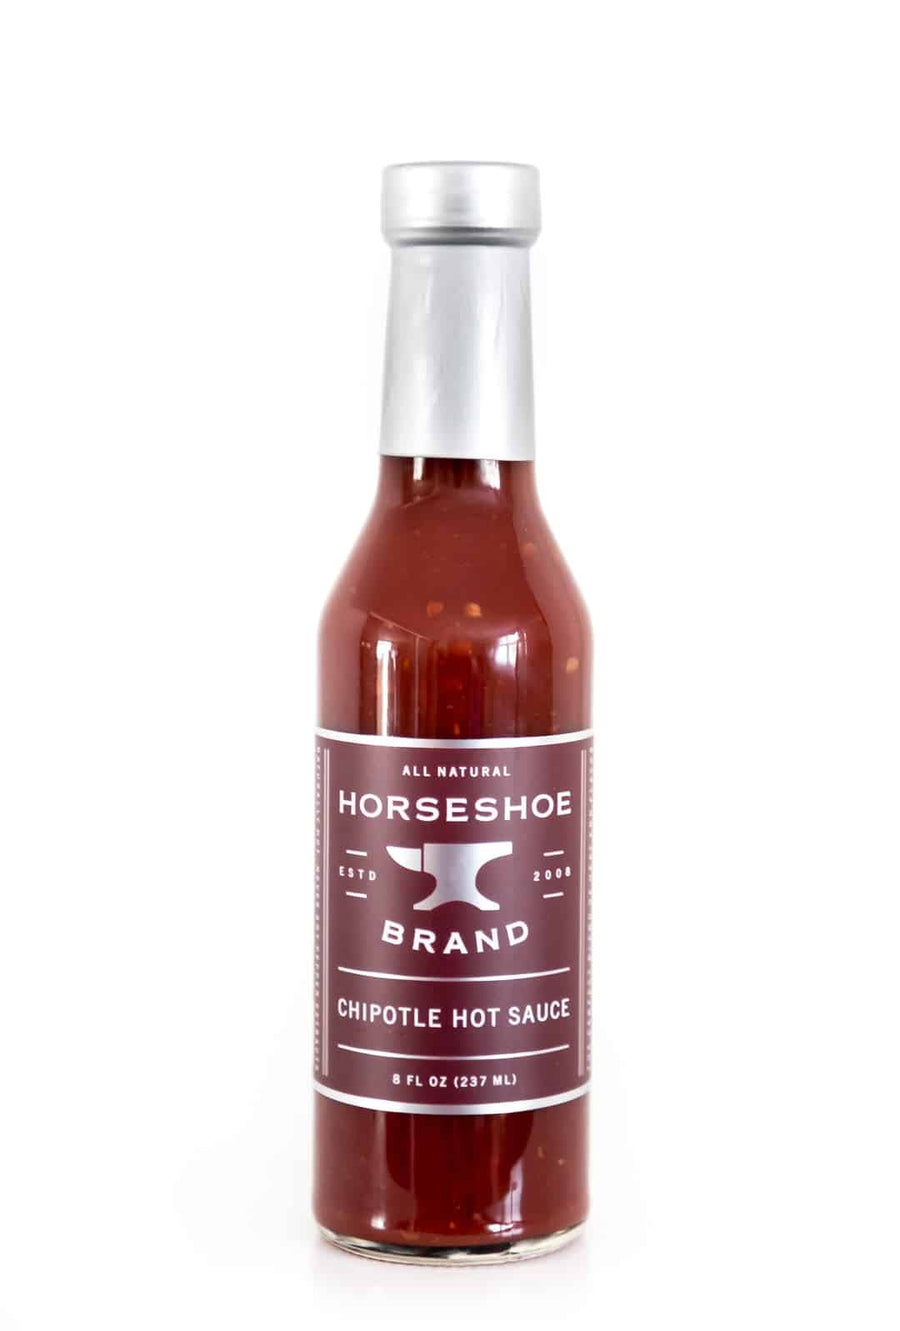 Horseshoe Brand Chipotle Hot Sauce